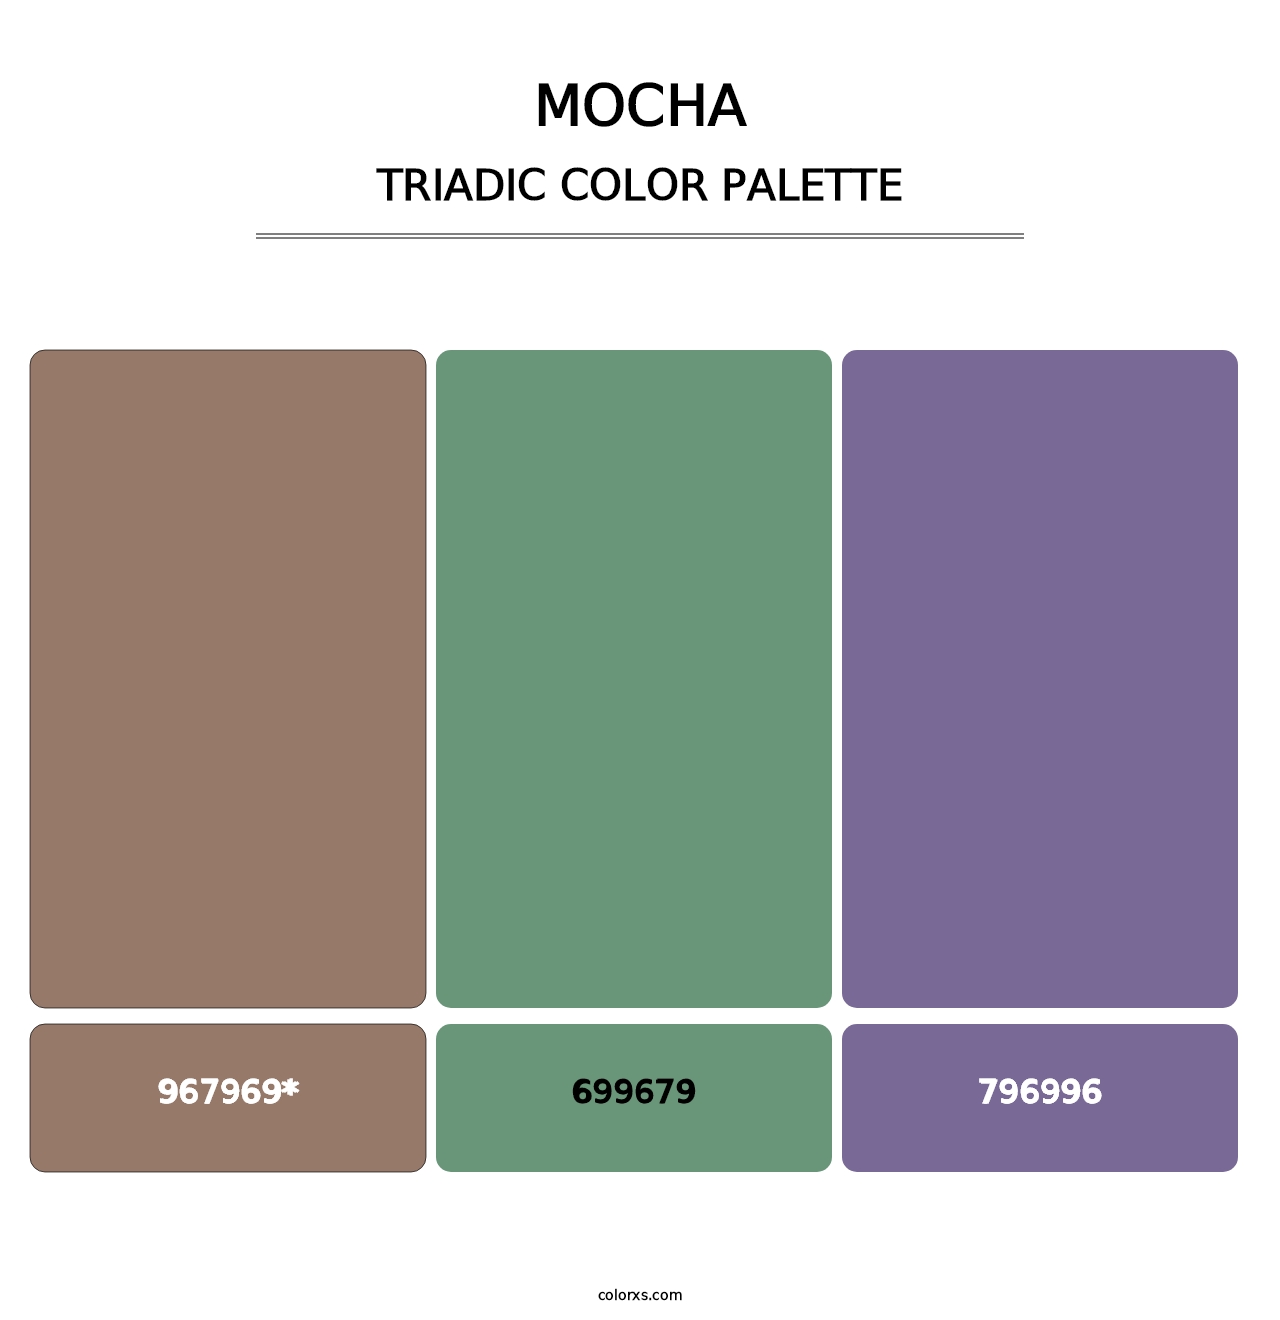 Mocha - Triadic Color Palette